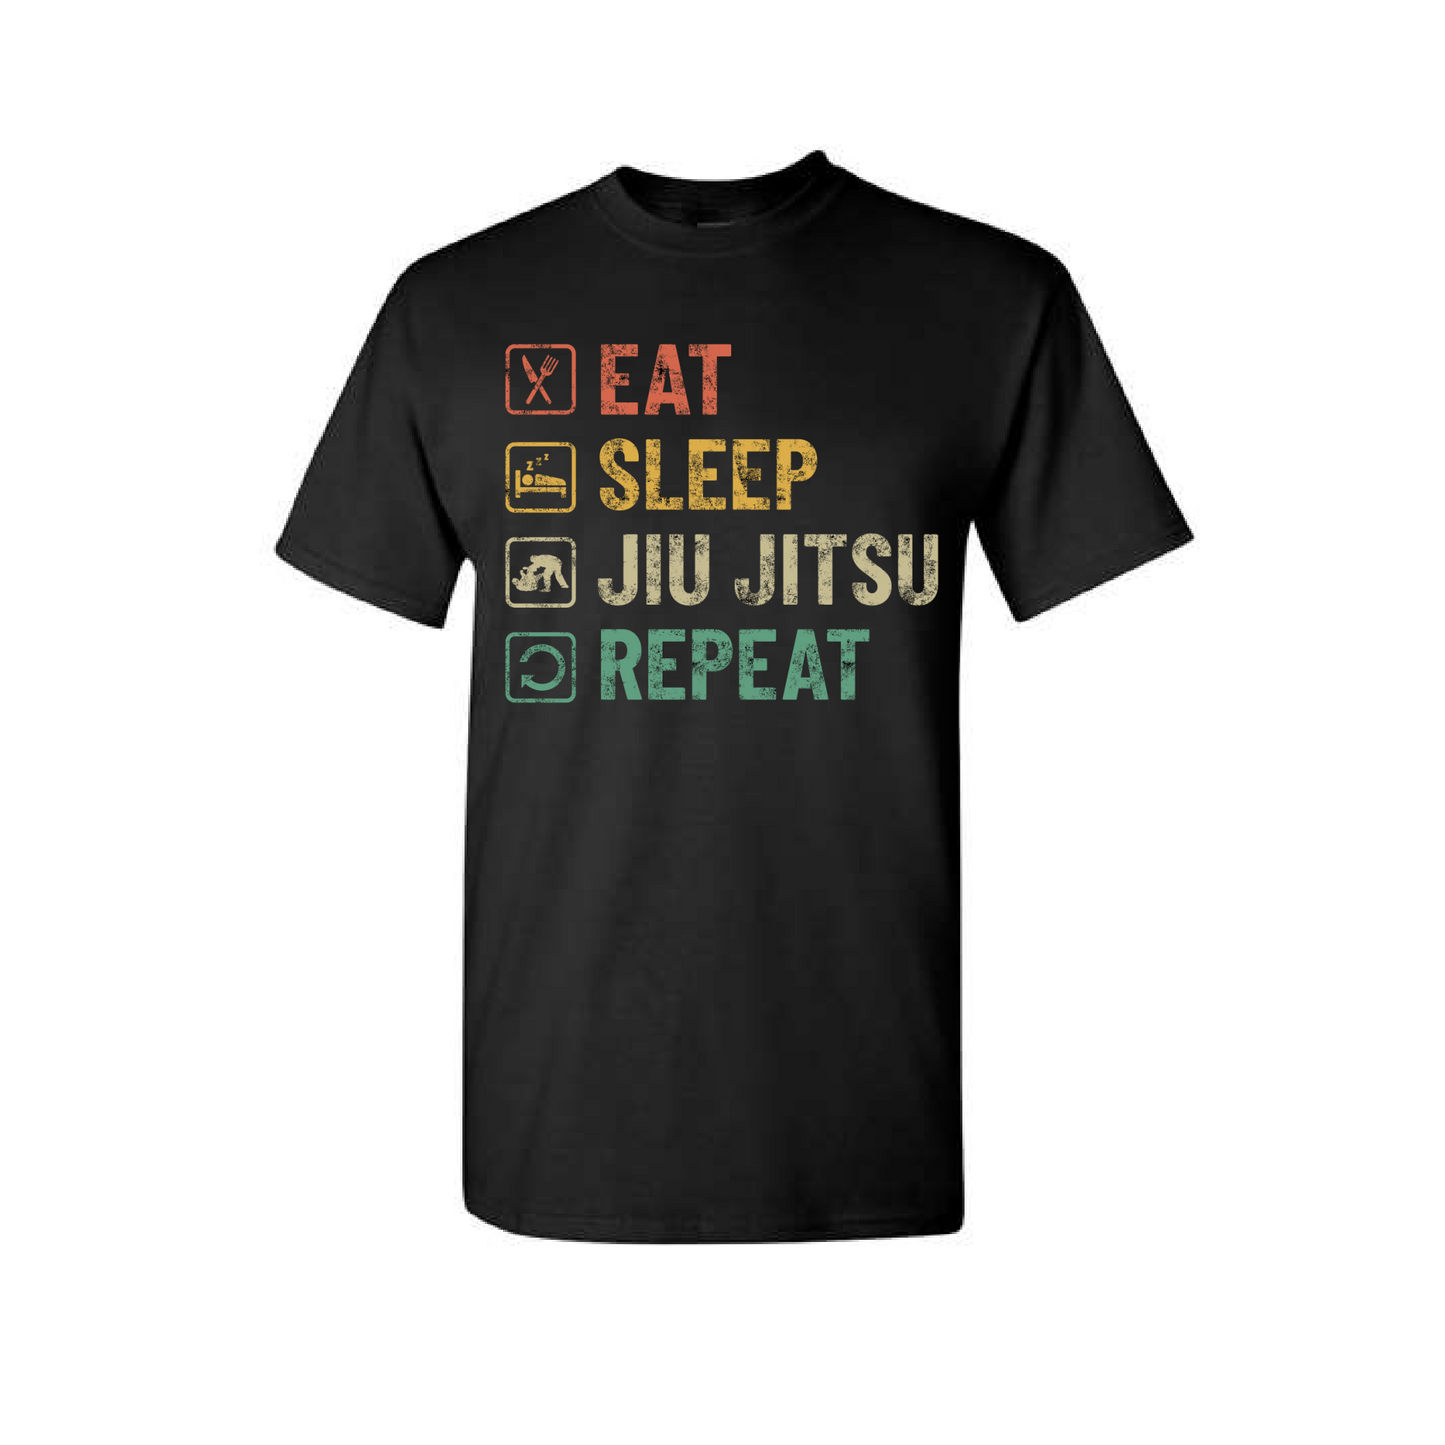 Eat. Sleep. JiuJitsu. Repeat T-Shirt